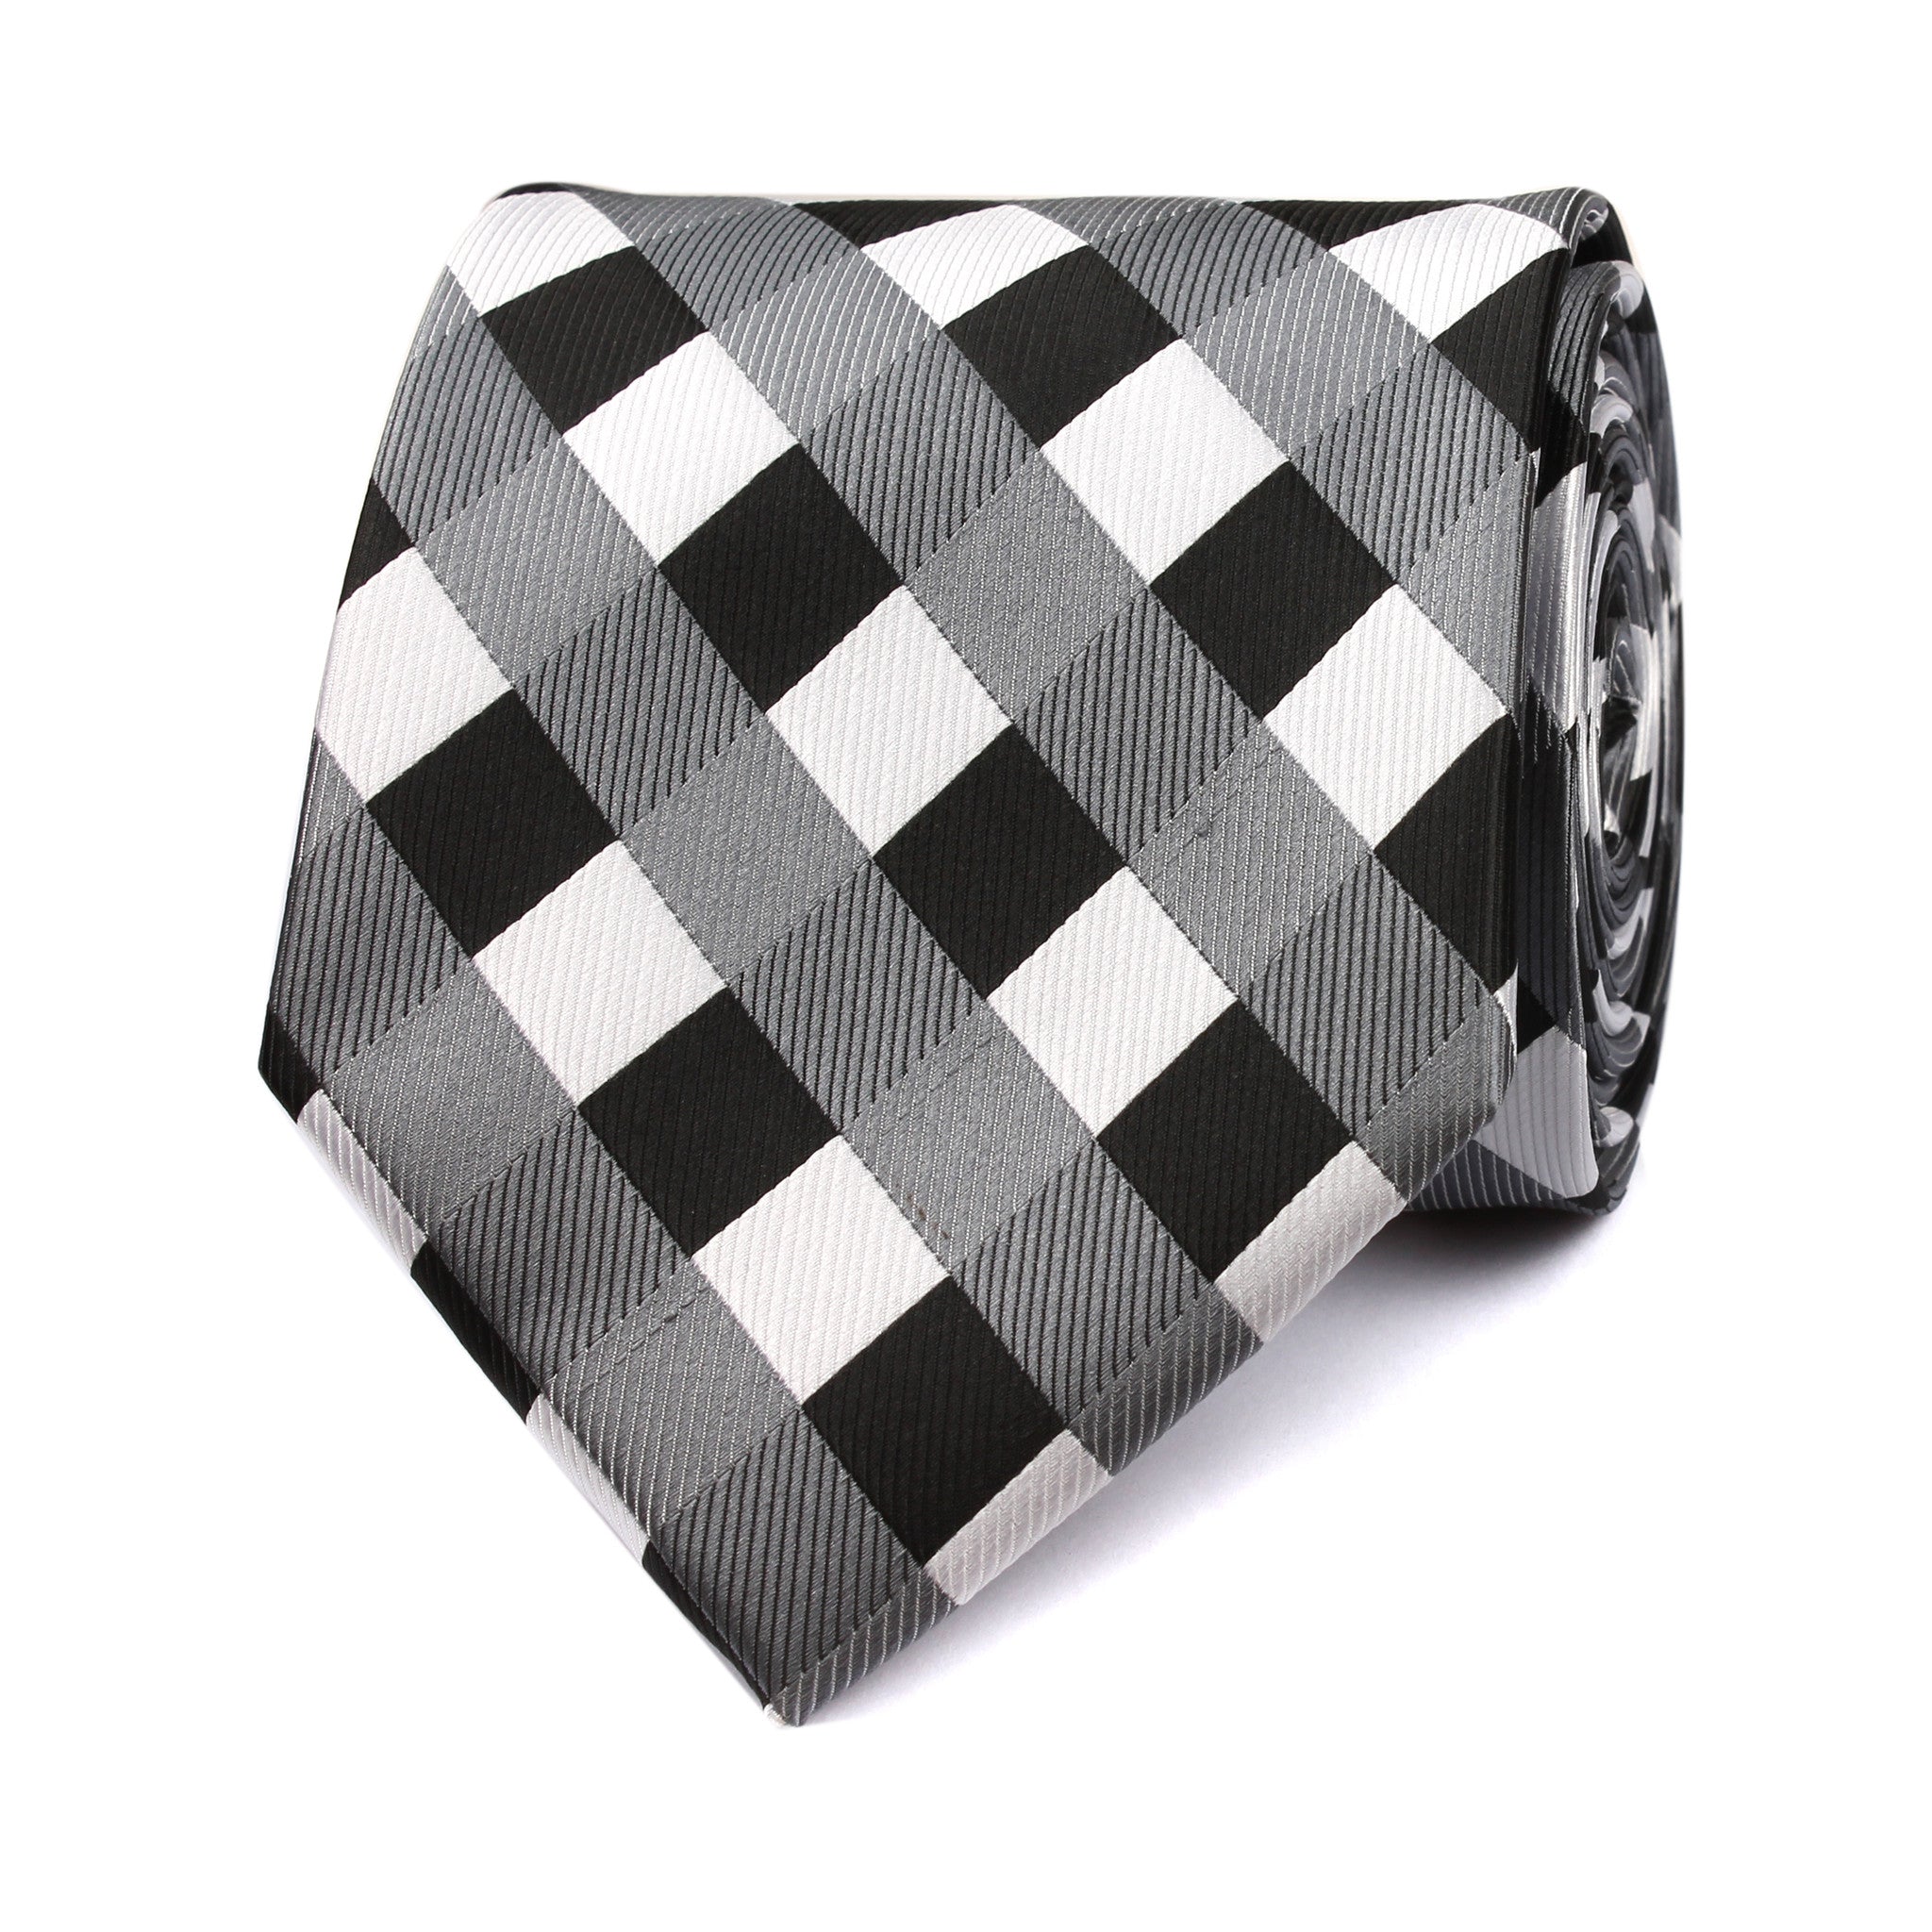 Black White Grey Checkered Tie Front View